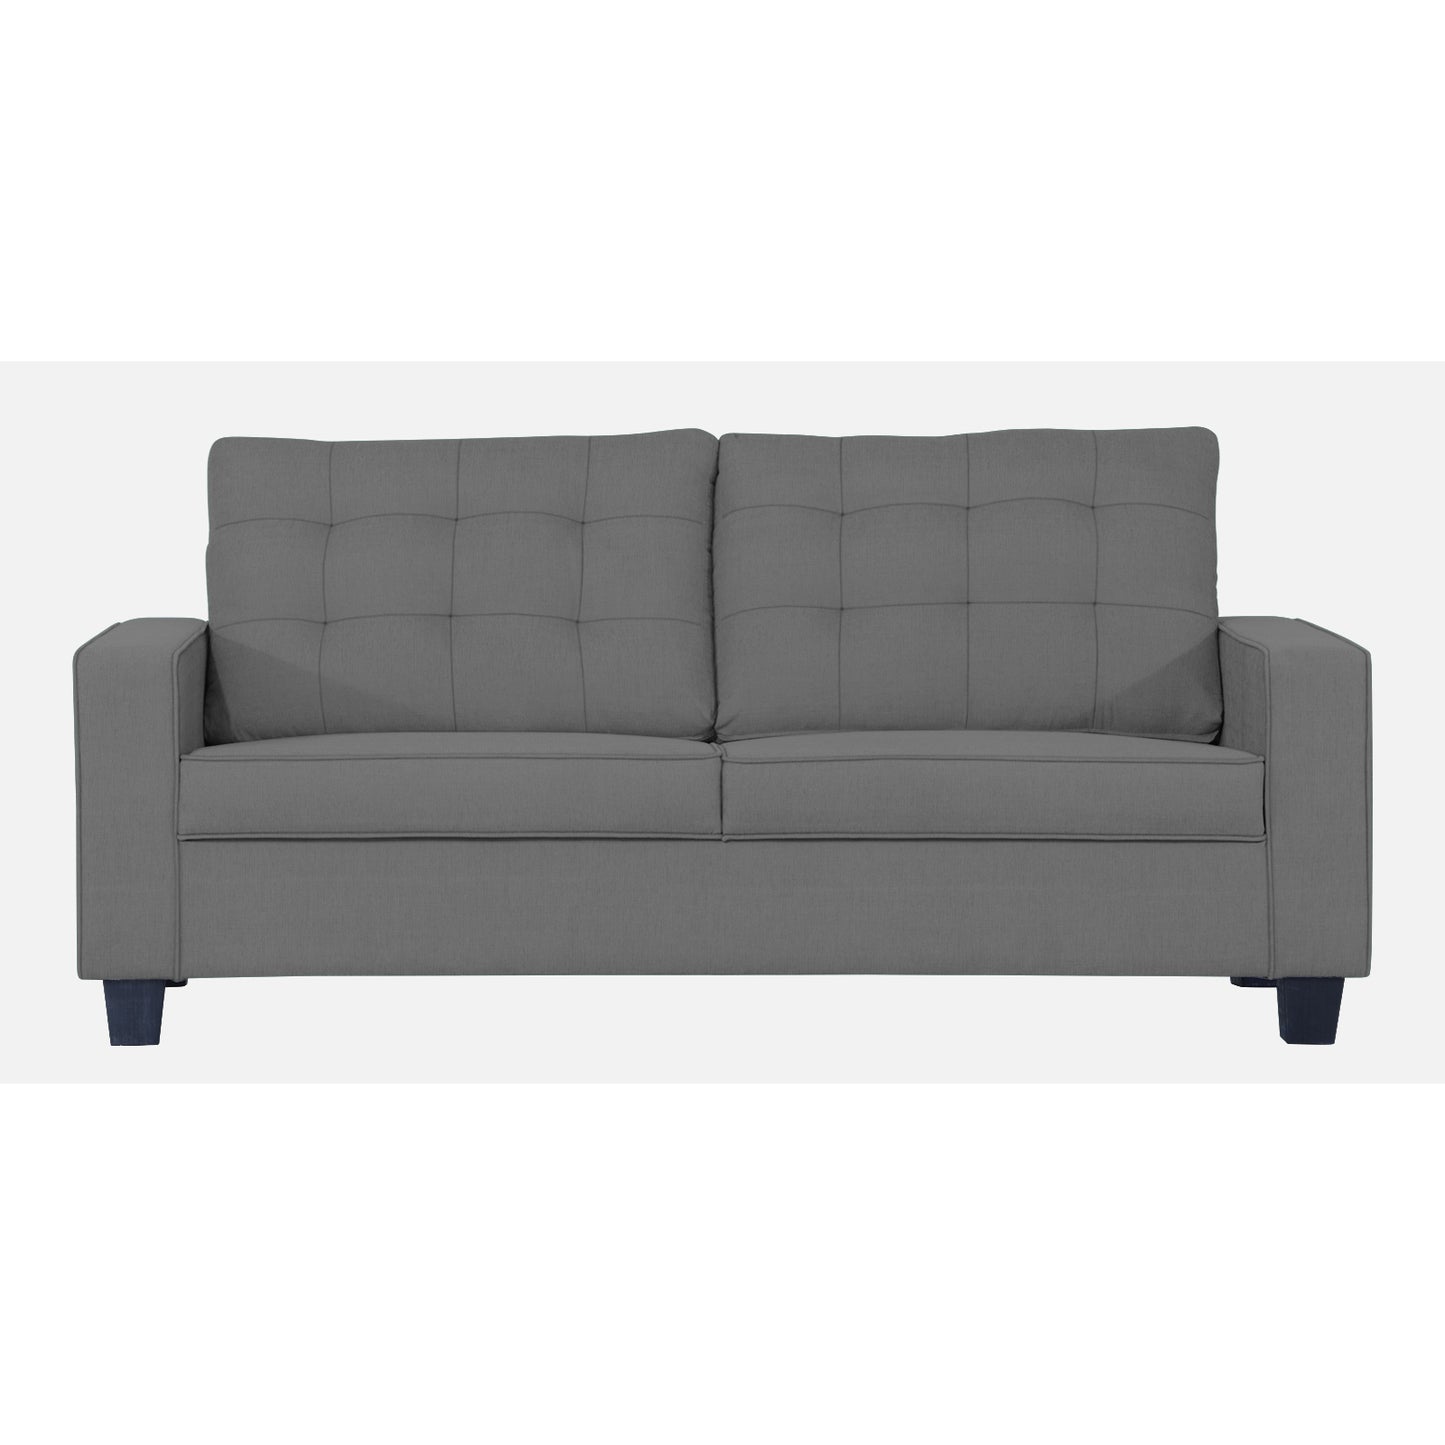 Adorn India Raptor 3 Seater Sofa (Grey)